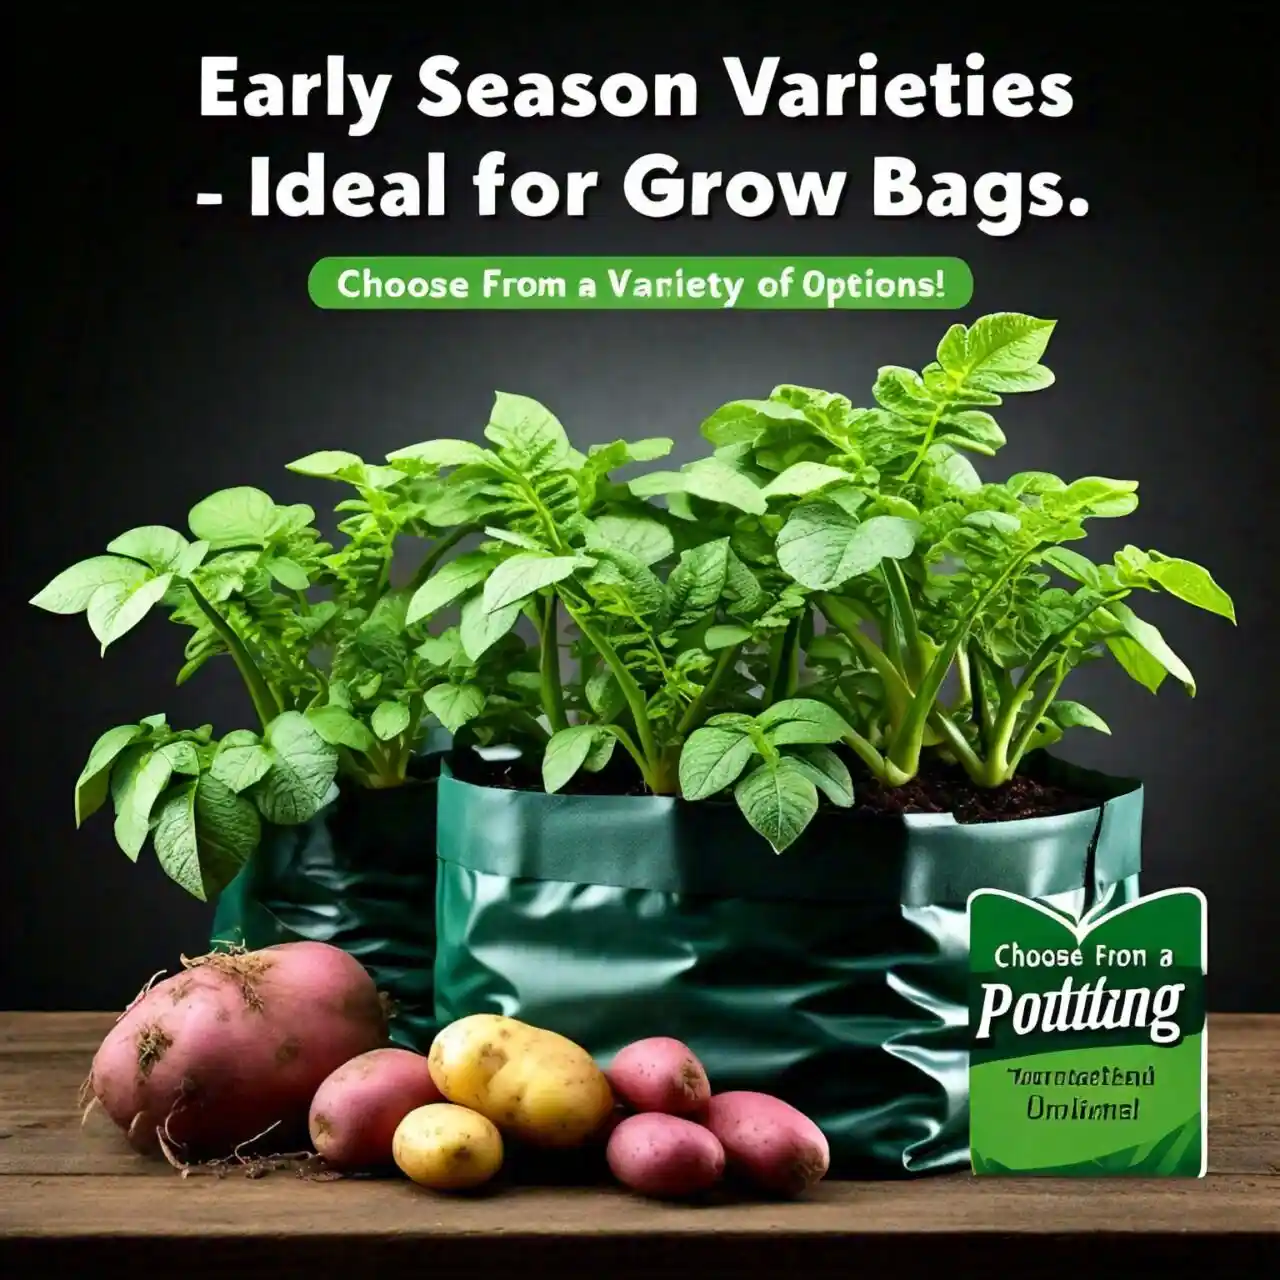 Early Season Varieties - Ideal for Grow Bags